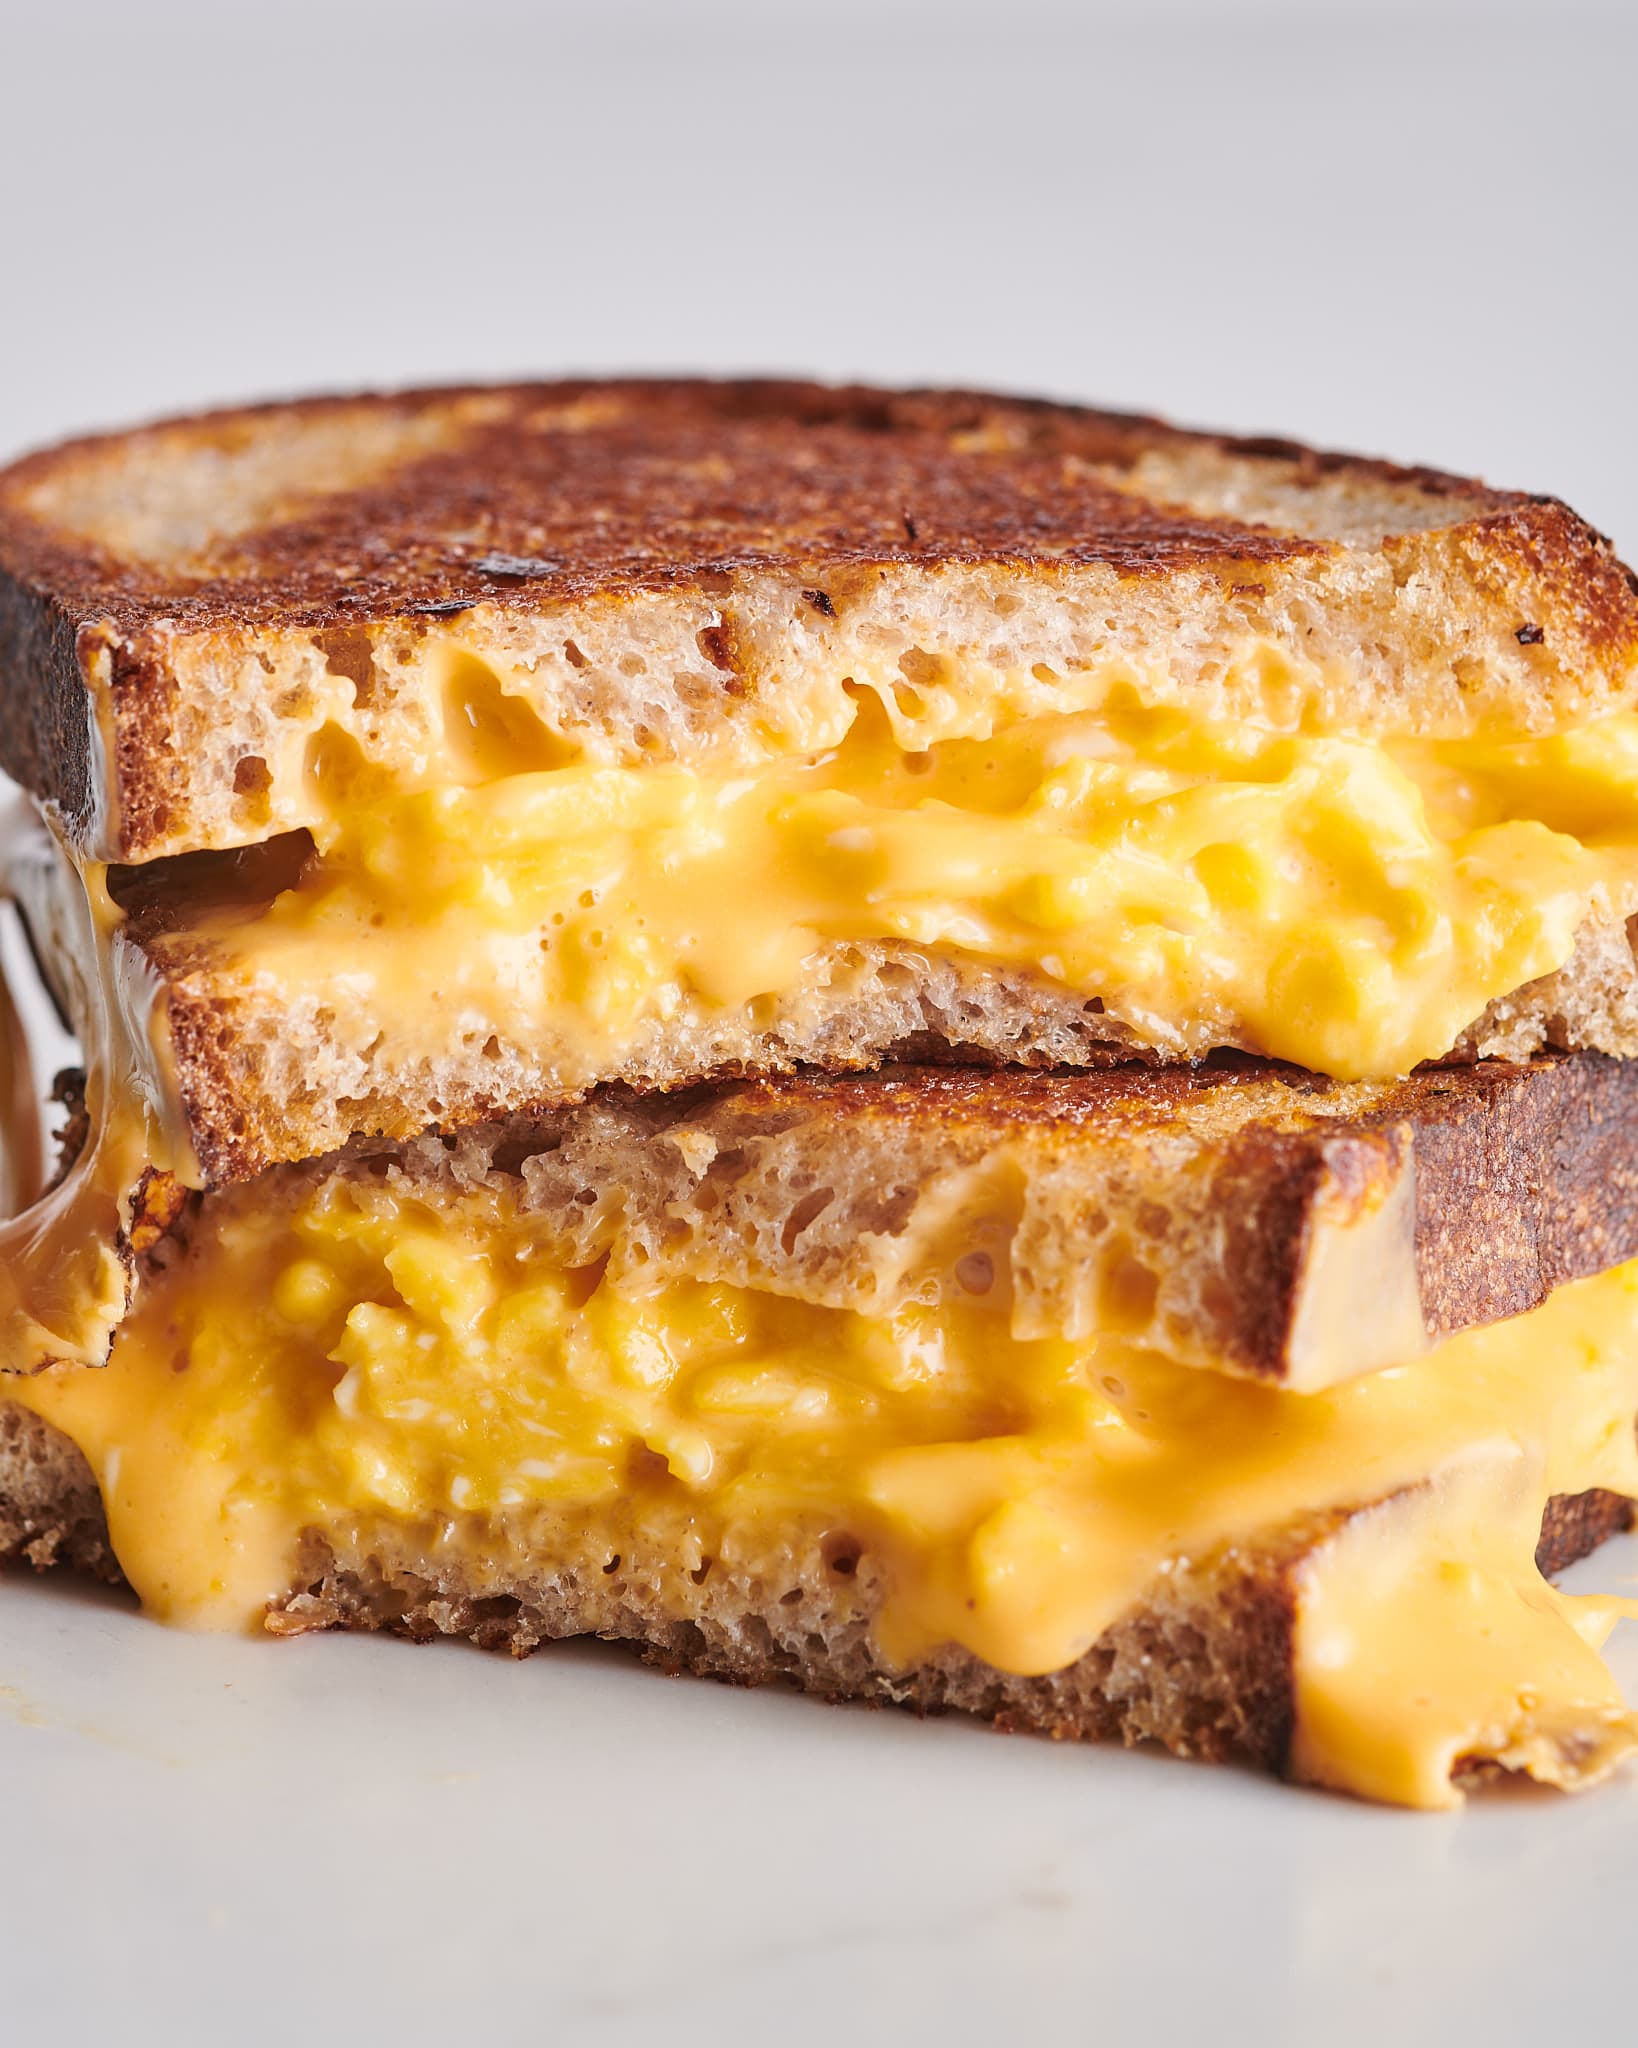 https://cdn.apartmenttherapy.info/image/upload/v1620425563/k/Photo/Series/2021-05-snapshot-five-ingredient-breakfast-sandwiches/Snapshot_5-Ingredient-Breakfast-Sandwiches_Grilled-Cheese/2021-05-03_ATK-0133.jpg